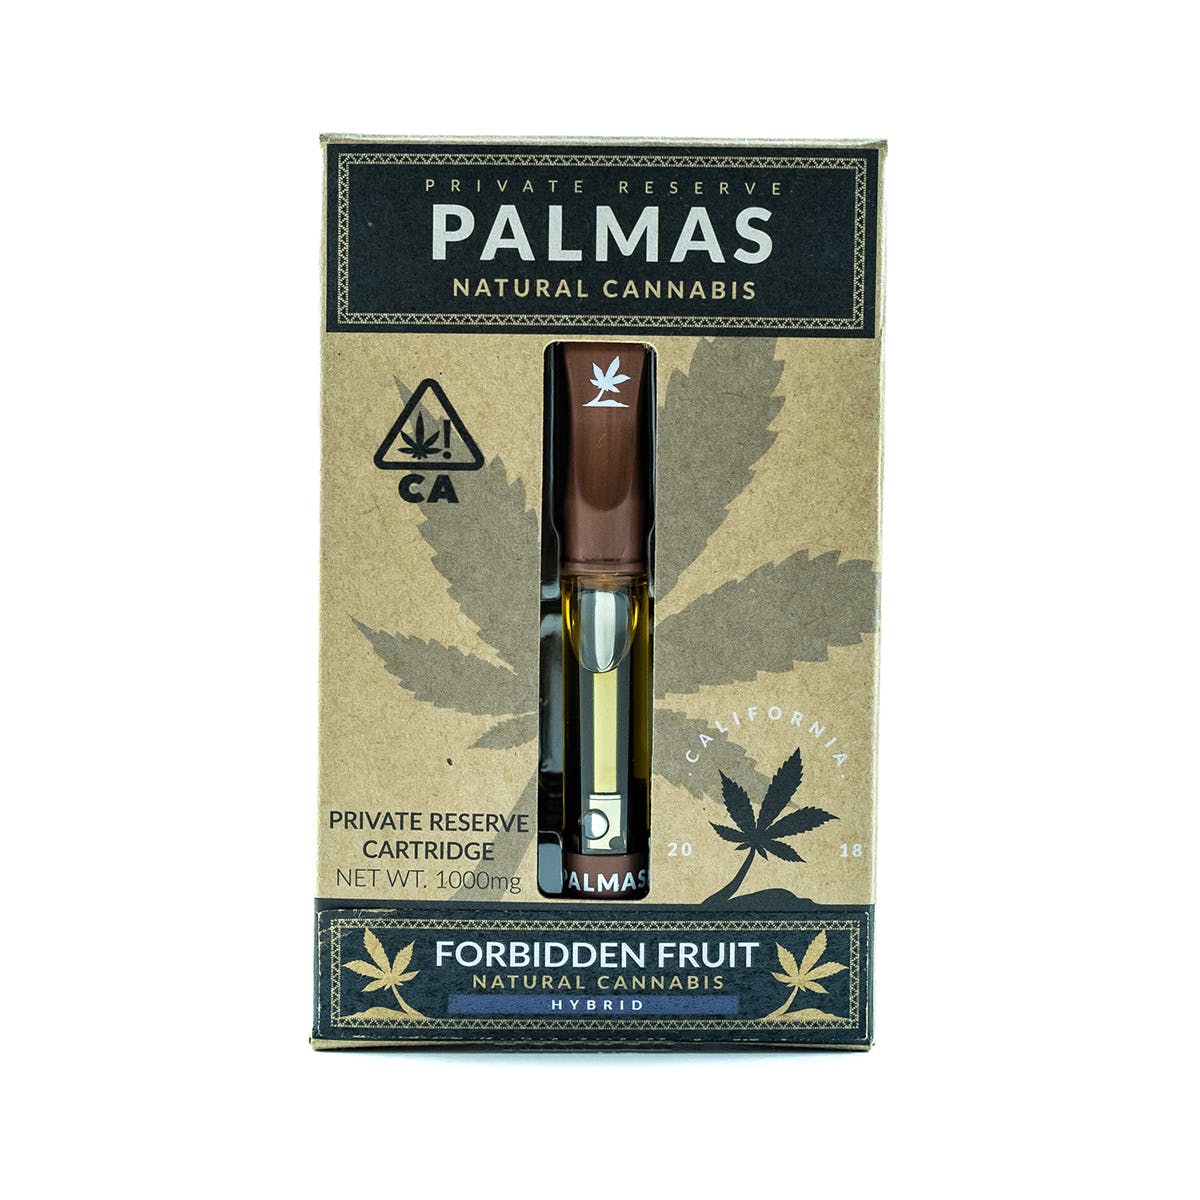 marijuana-dispensaries-true-central-20-cap-collective-in-los-angeles-palmas-private-reserve-cartridge-forbidden-fruit